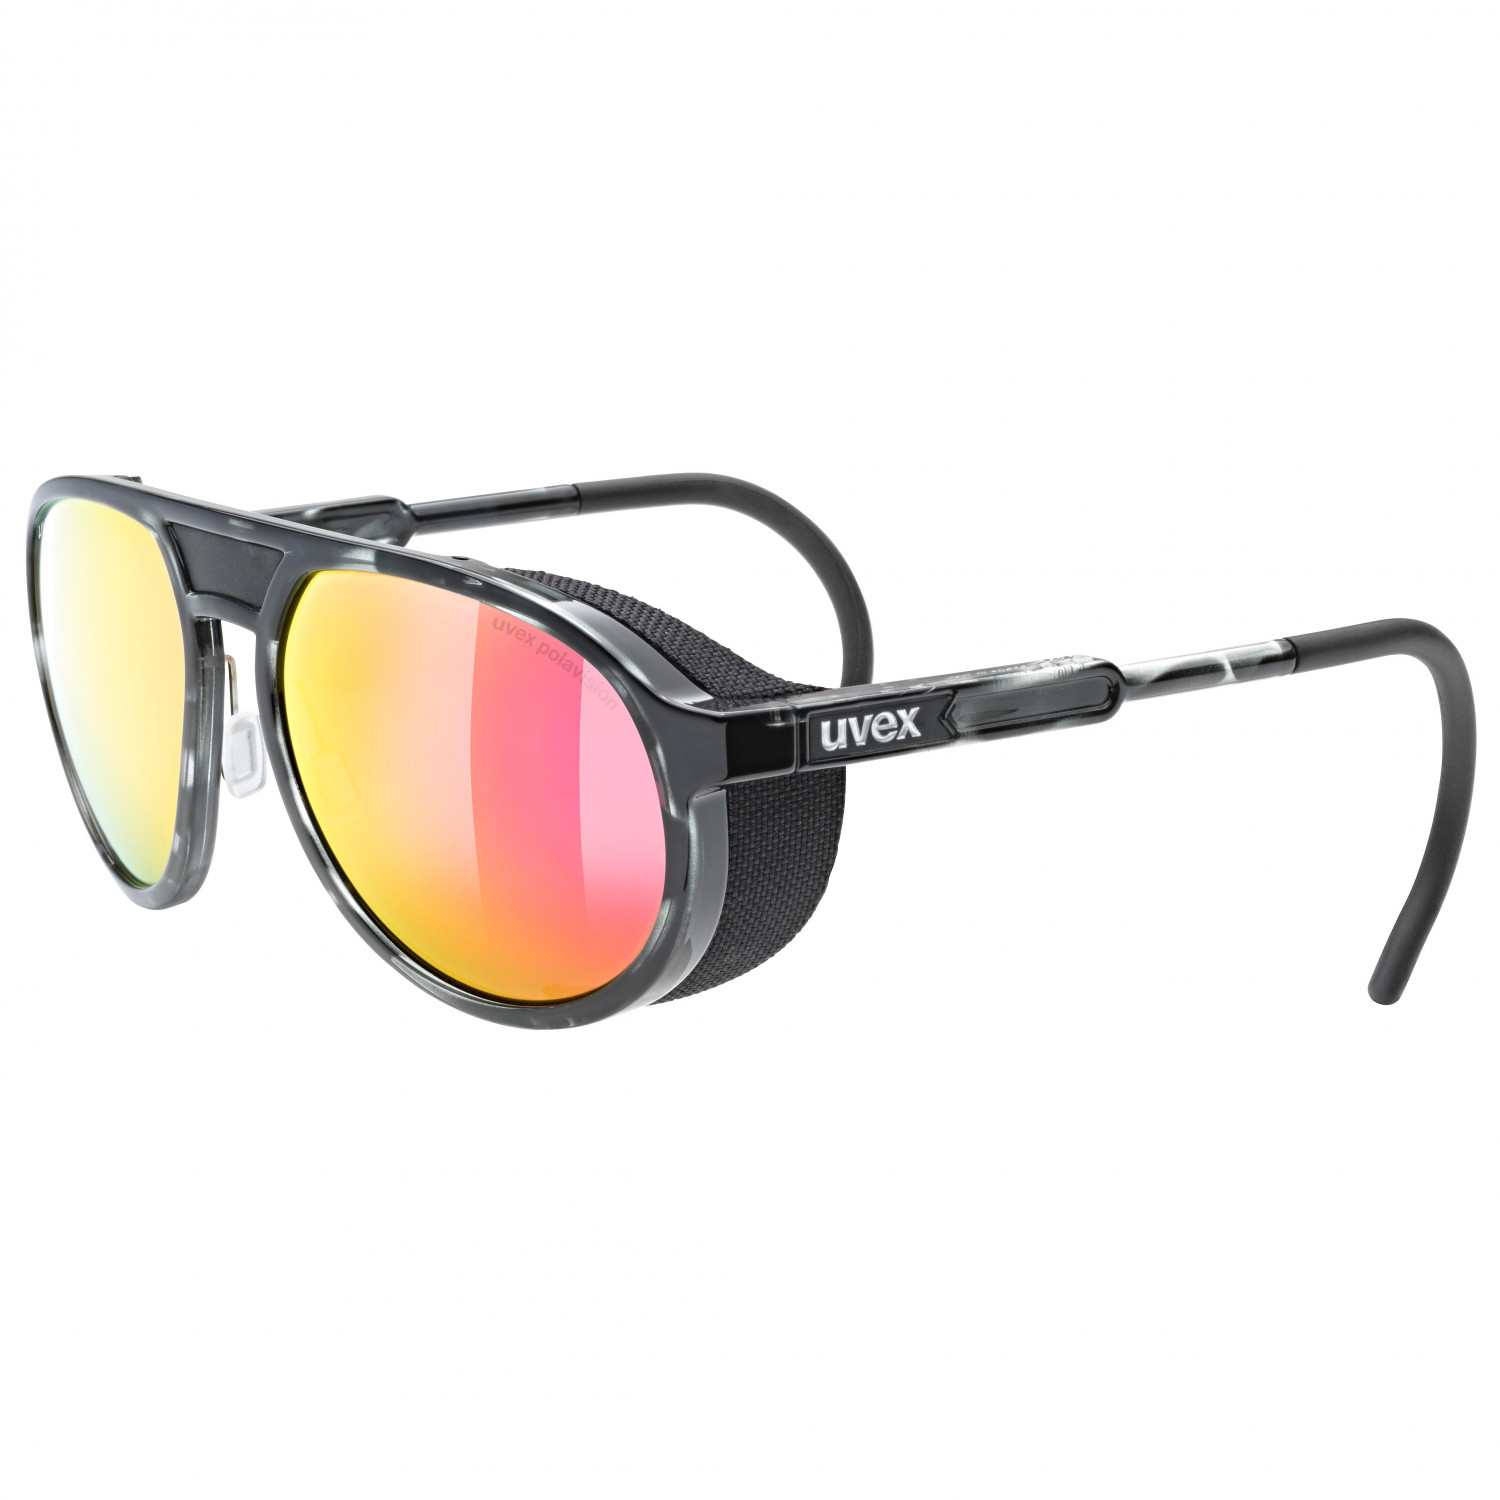 Солнцезащитные очки Uvex Mtn Classic Polavision Mirror Cat 3, цвет Black Tortoise солнцезащитные очки adidas sp0083 mirror cat 3 цвет crystal